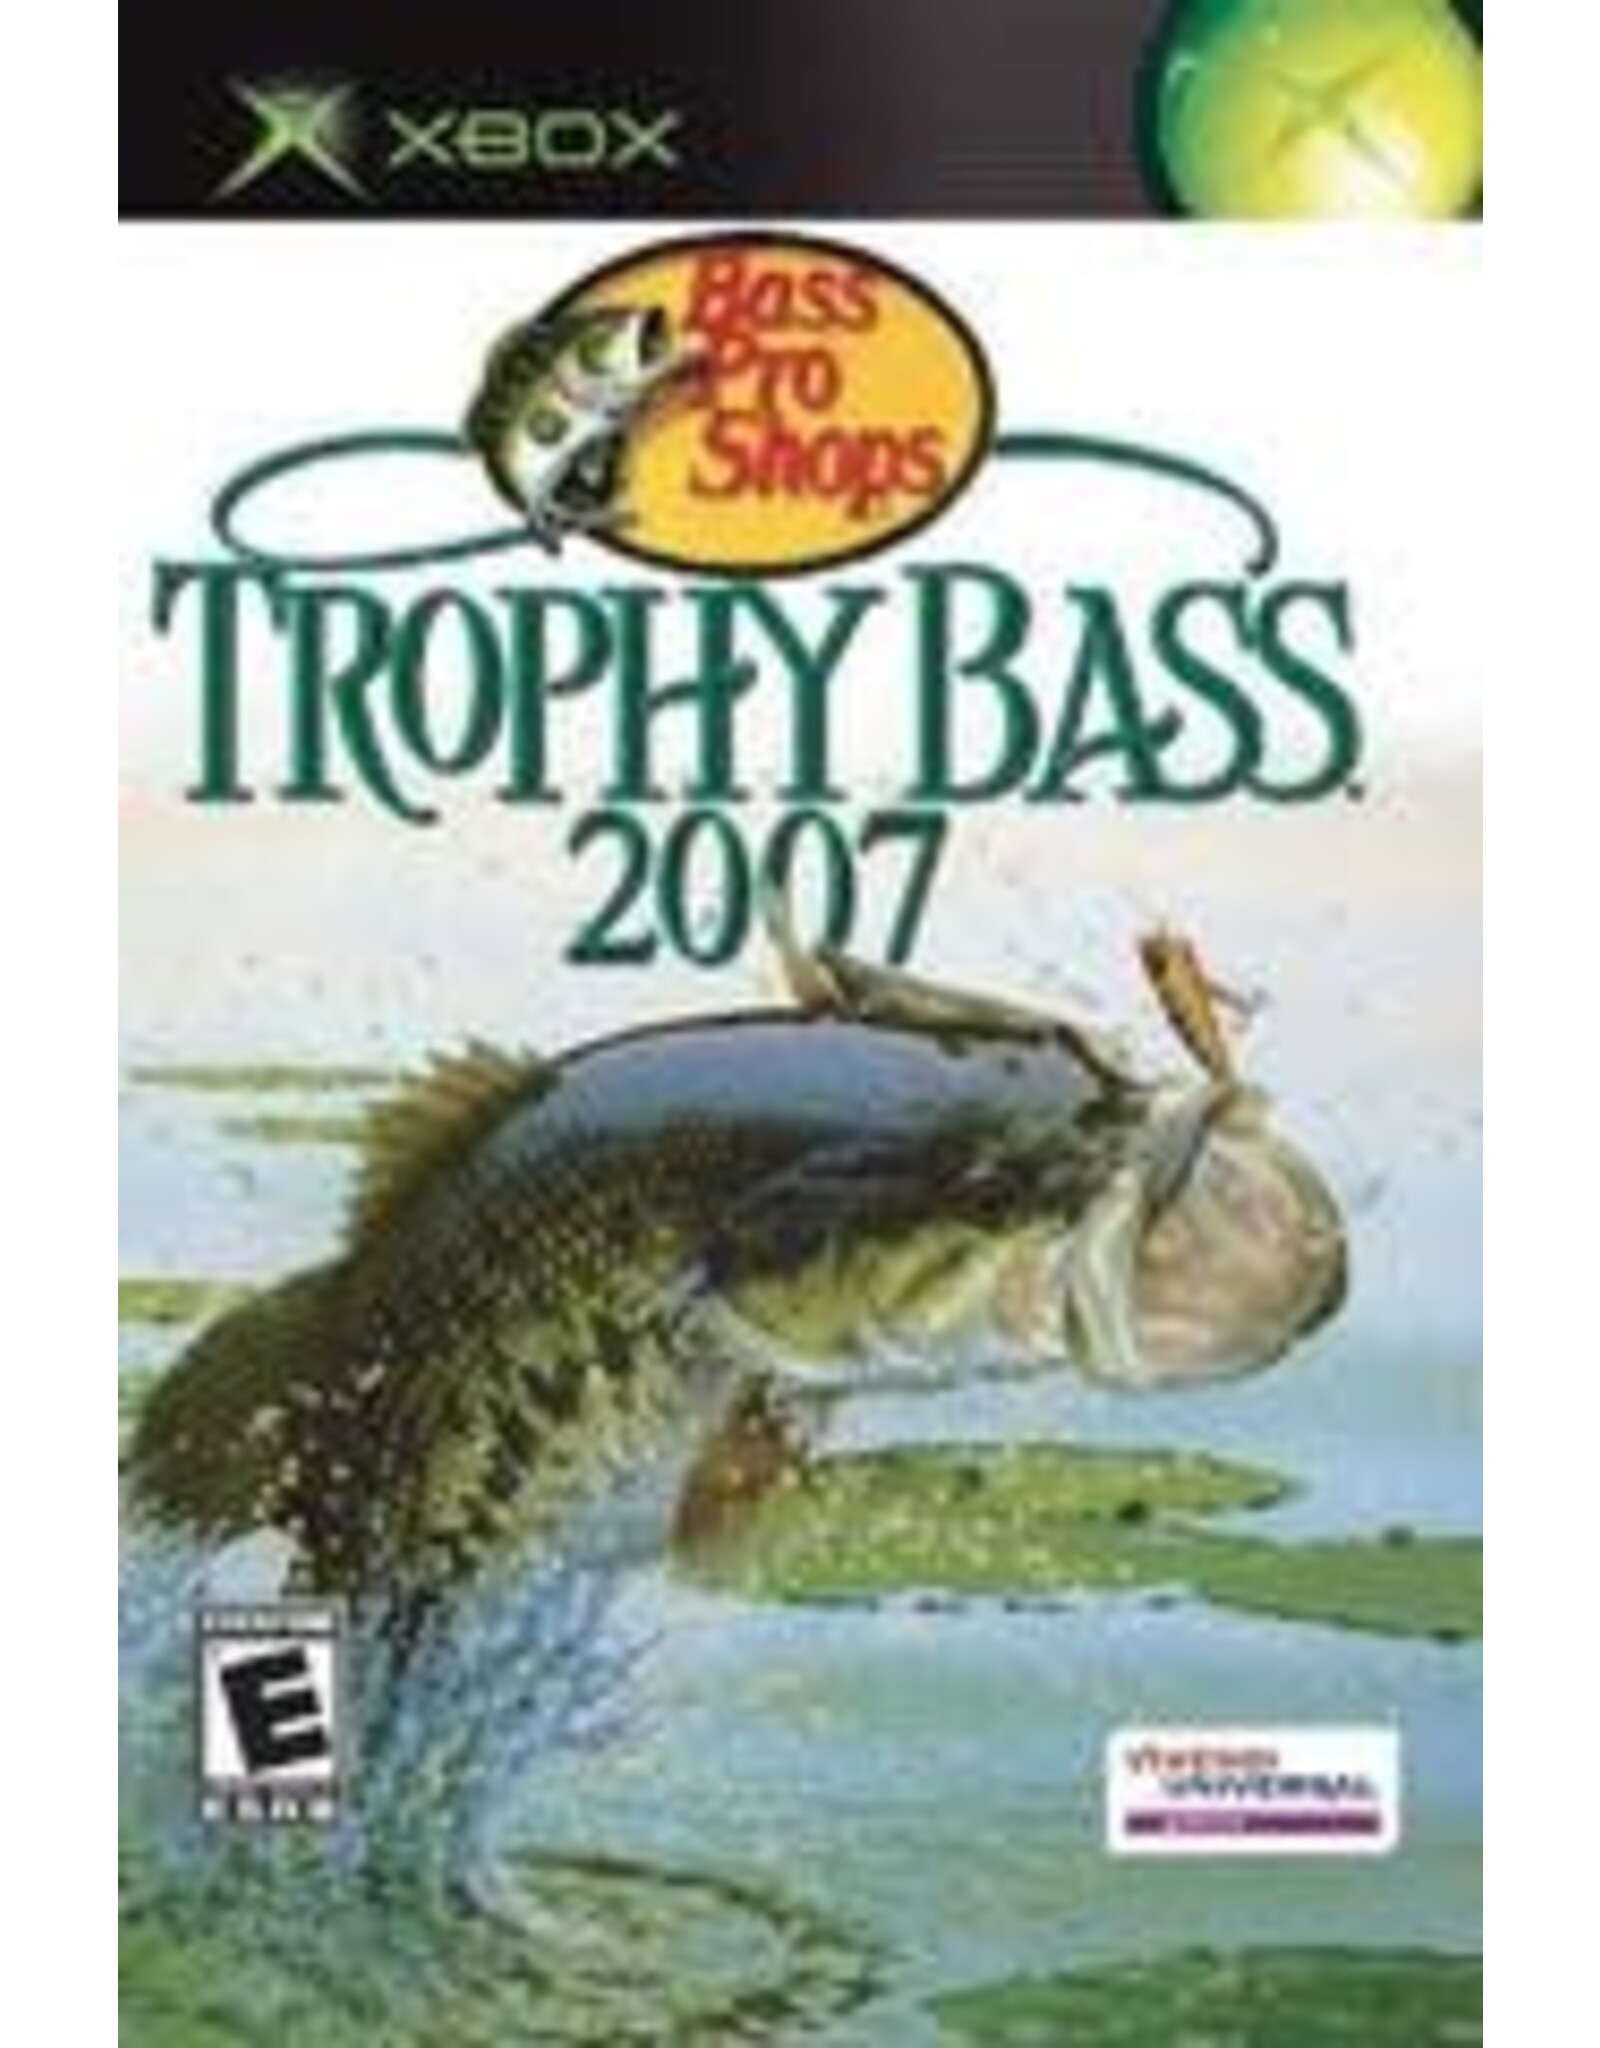 Xbox Bass Pro Shops Trophy Bass 2007